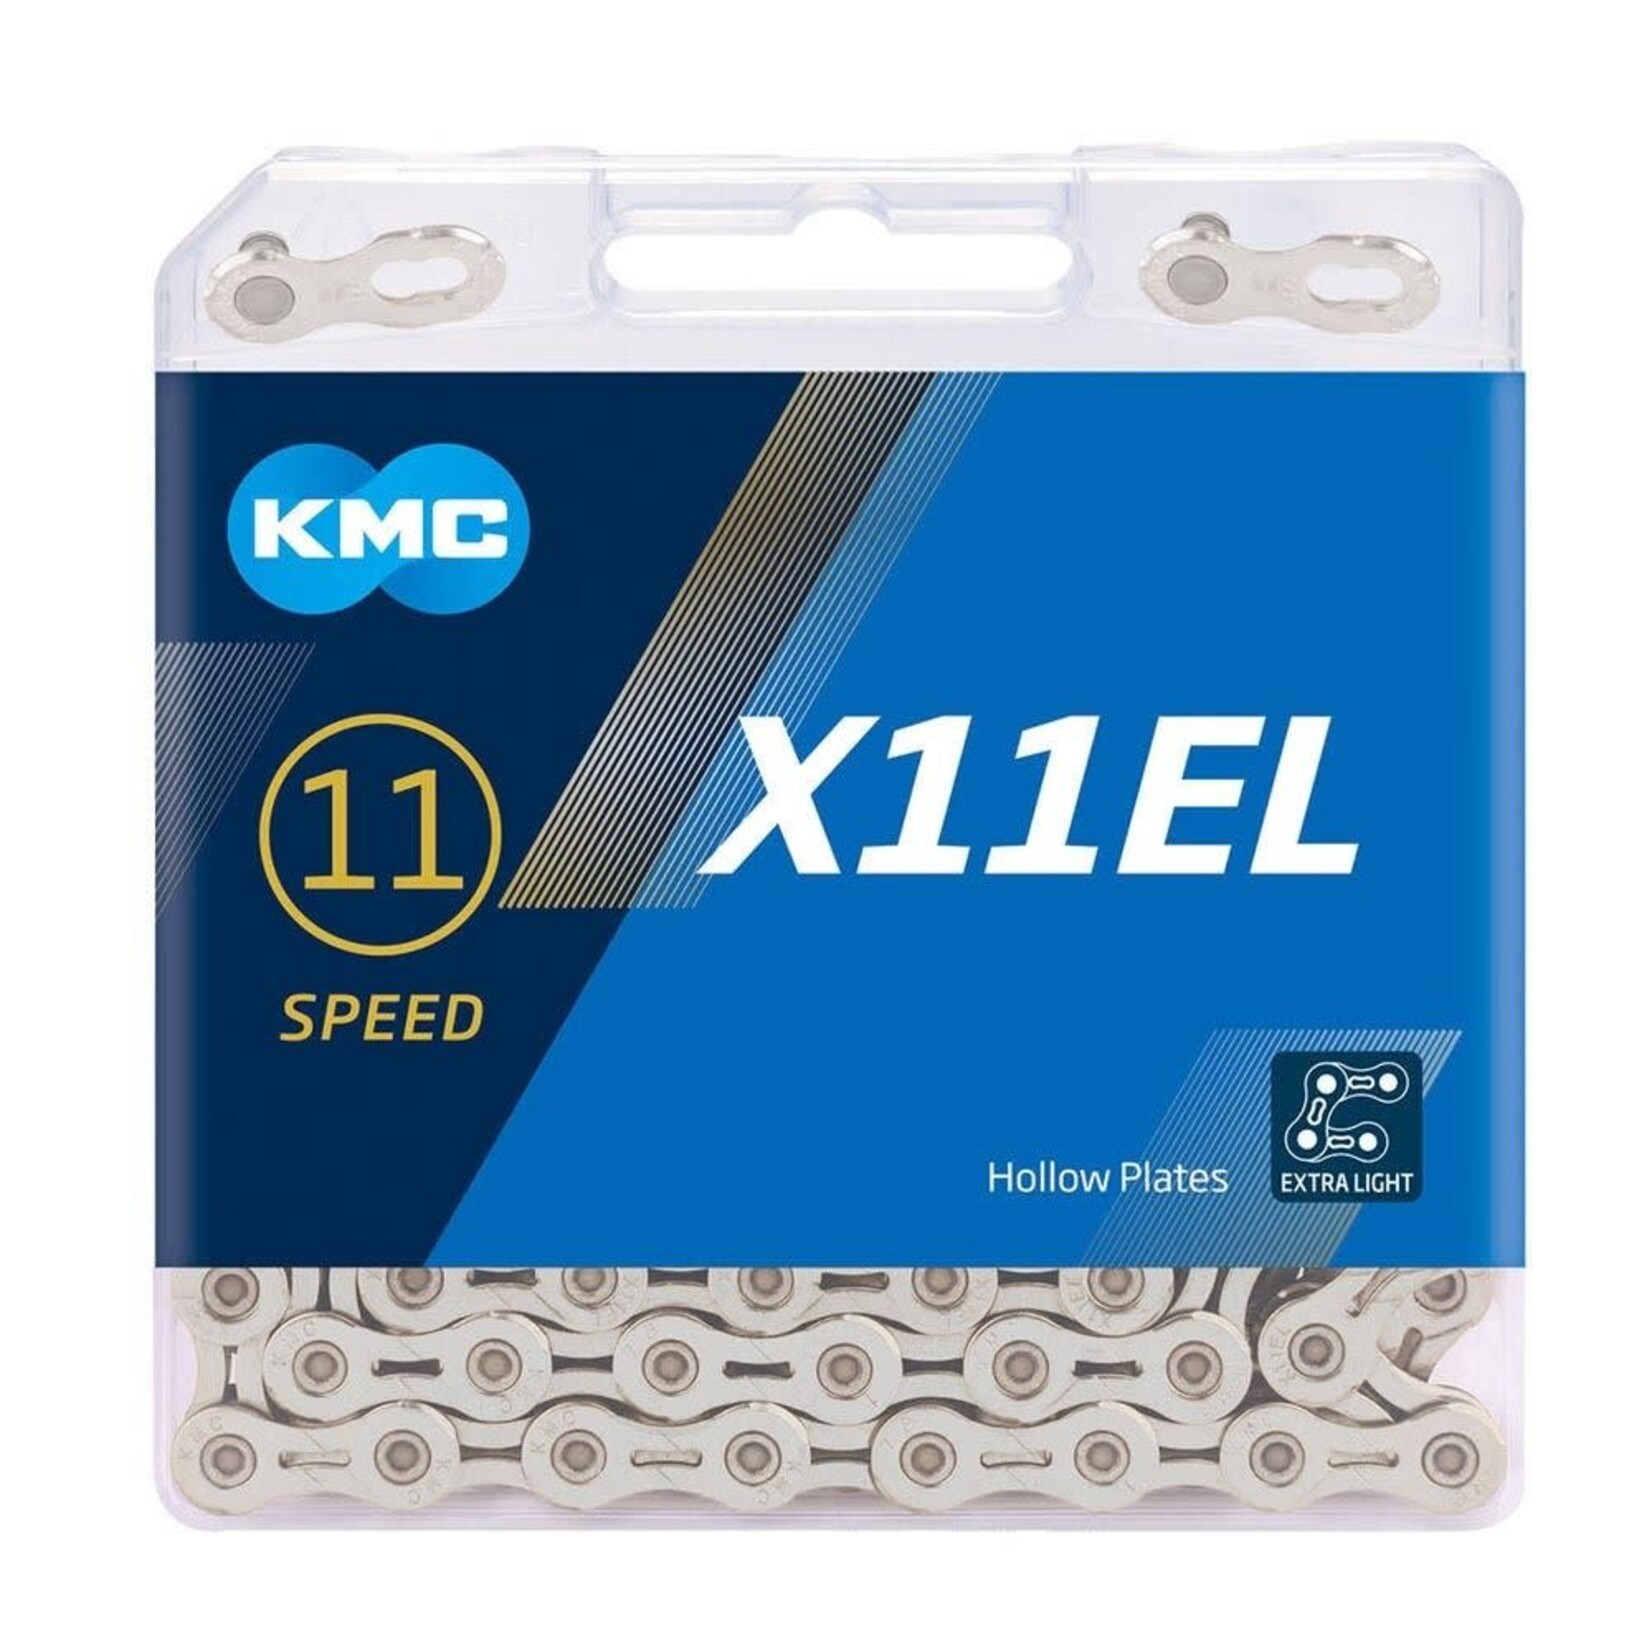 KMC KMC X11 EL 11 Speed Chain 118 Link Chain Silver